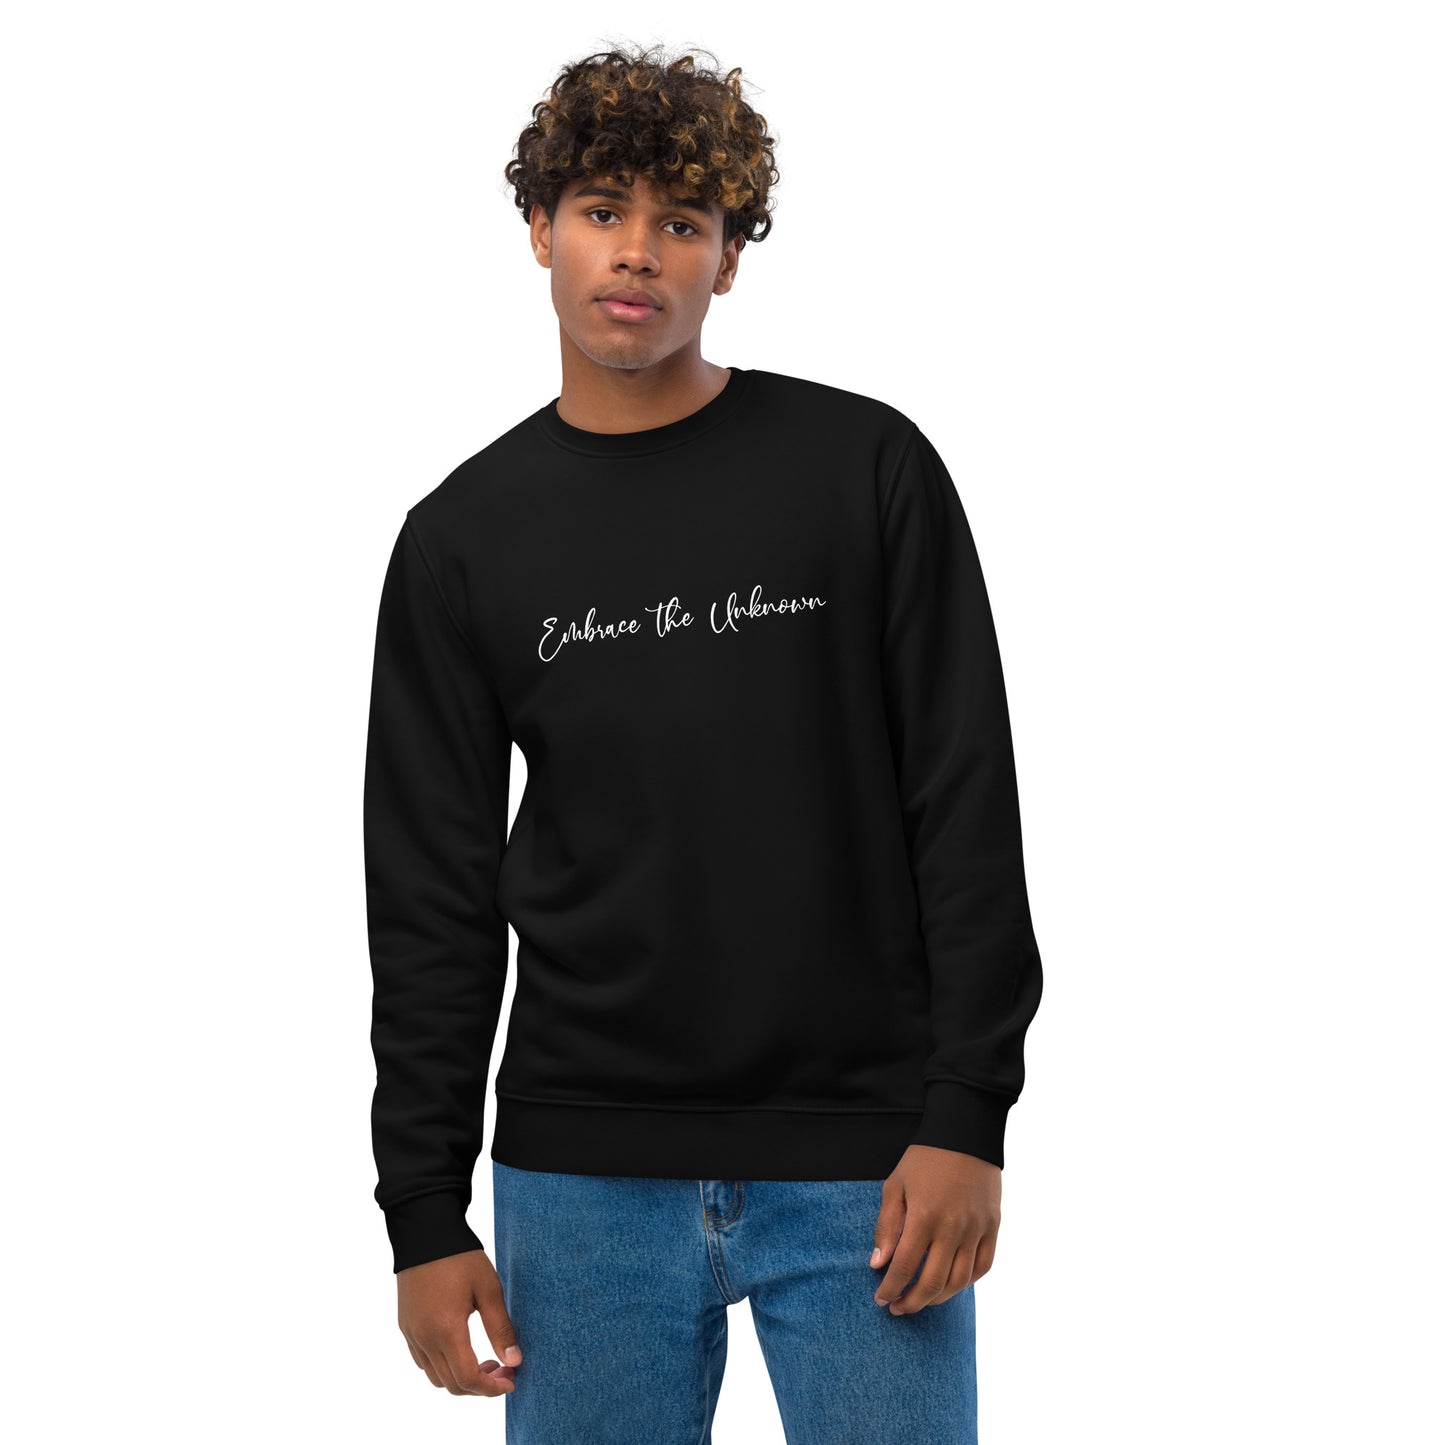 Embrace The Unknown Men's Organic Cotton Sweatshirt